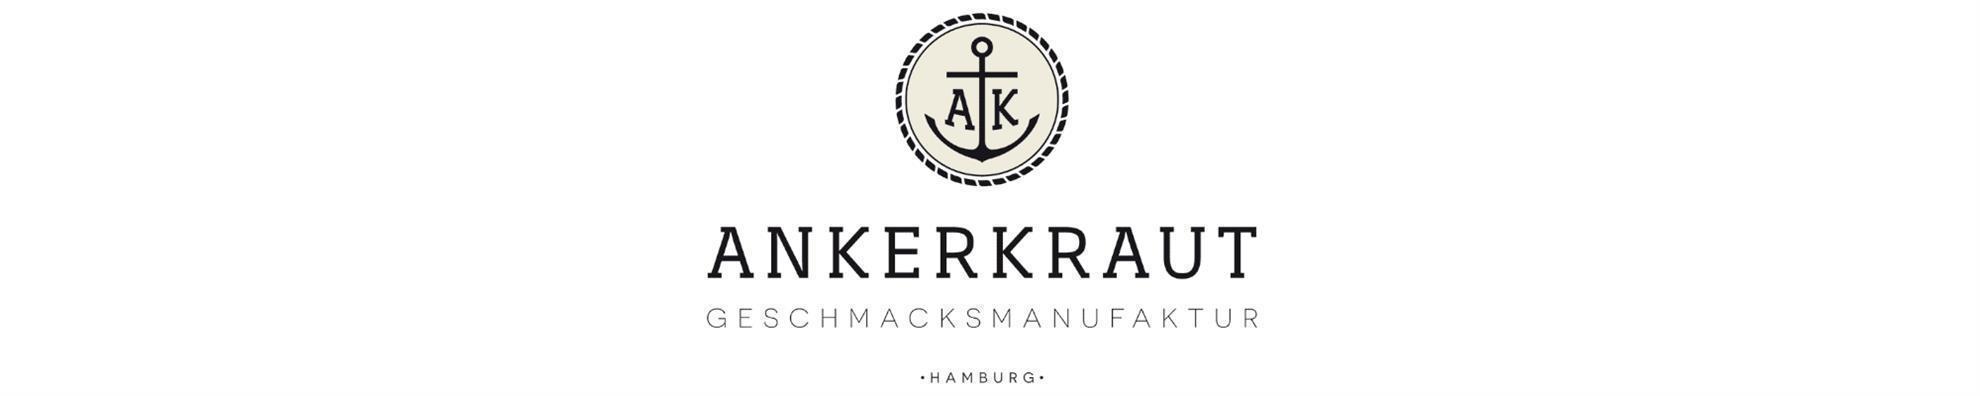 Ankerkraut - #Wieselpower